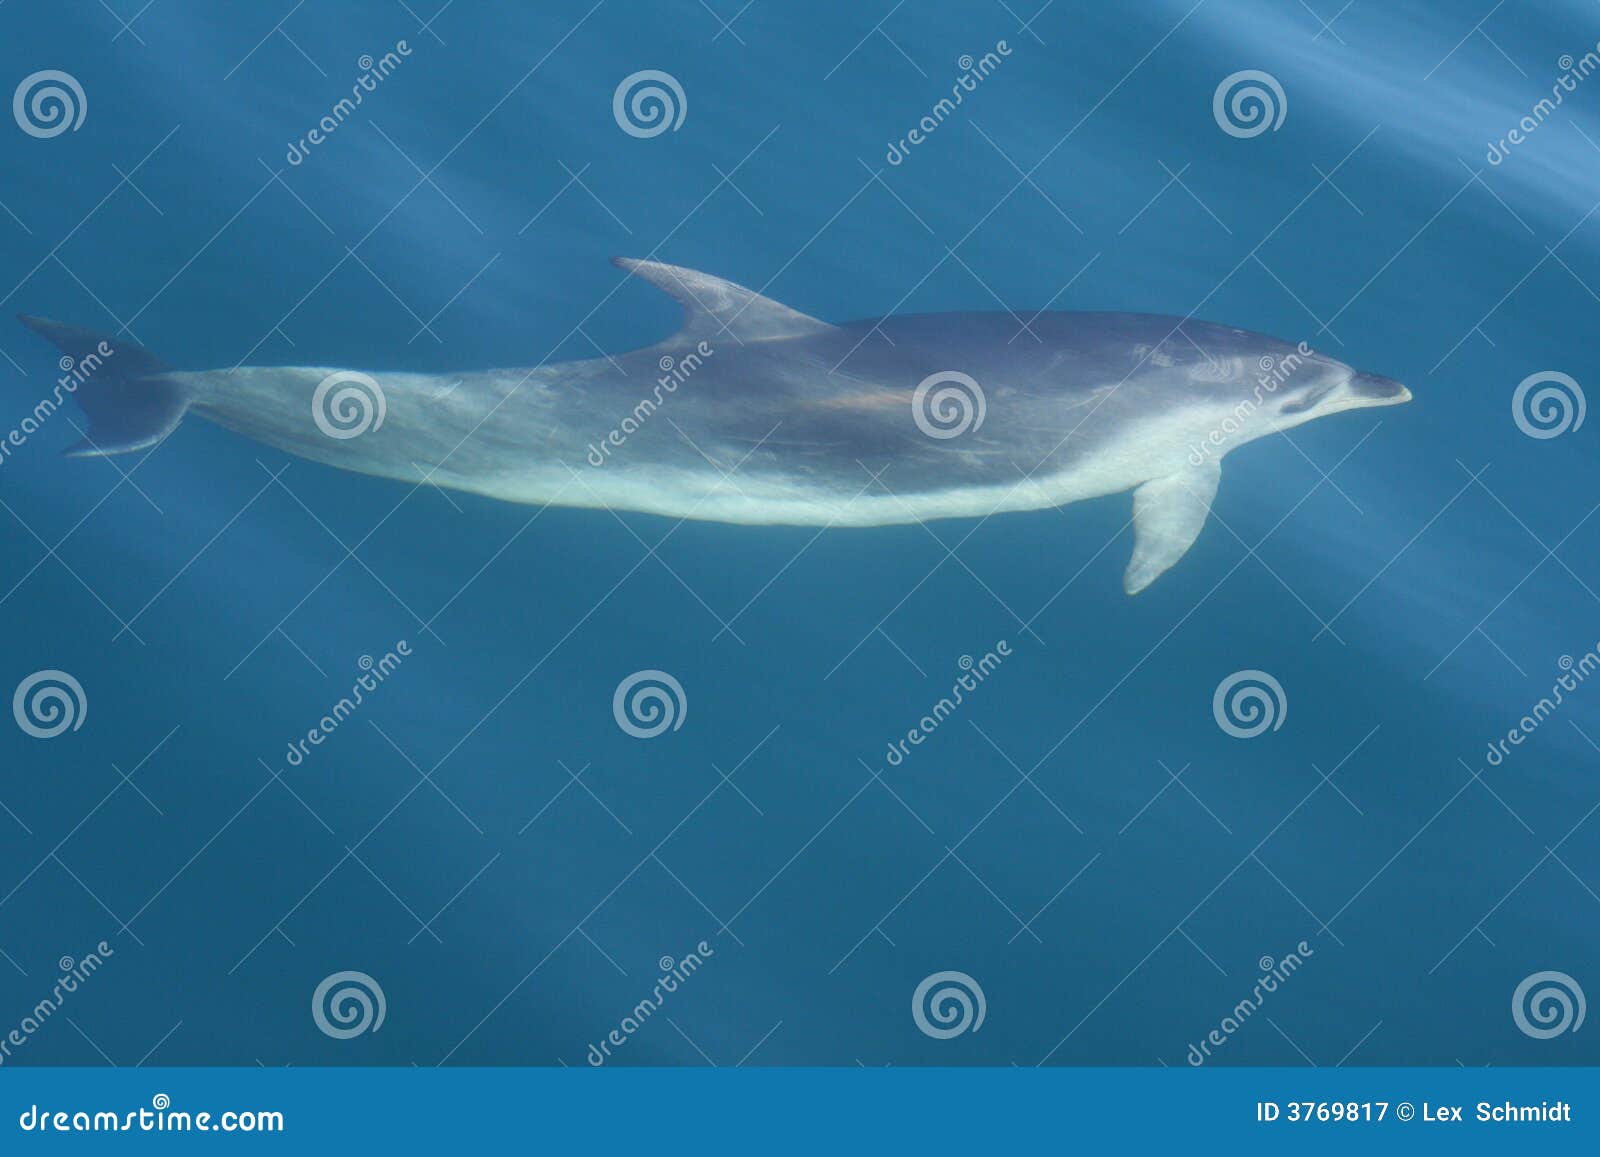 sleek dusky dolphin swimming